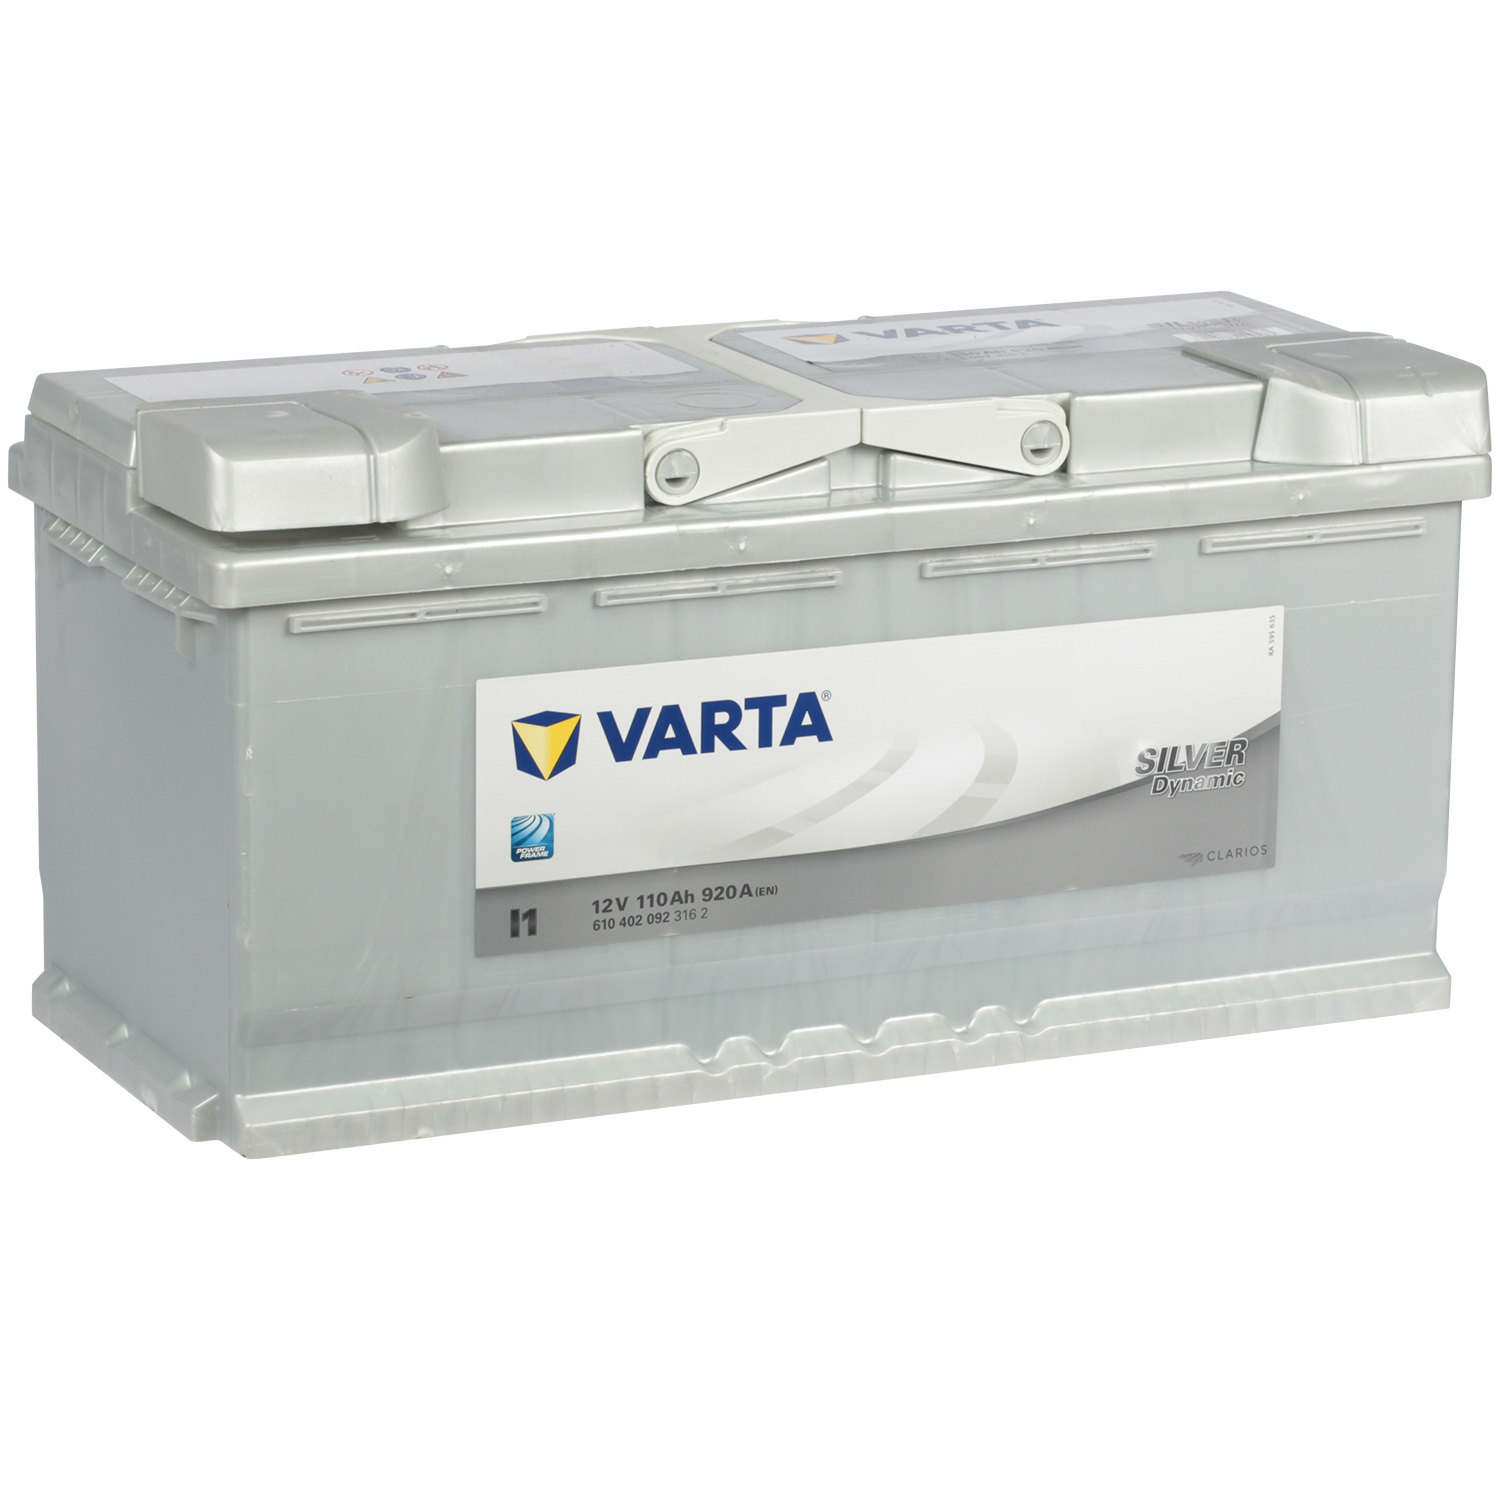 Varta Автомобильный аккумулятор Varta Silver Dynamic I1 110 Ач обратная полярность L6 varta автомобильный аккумулятор varta 72 ач обратная полярность lb3